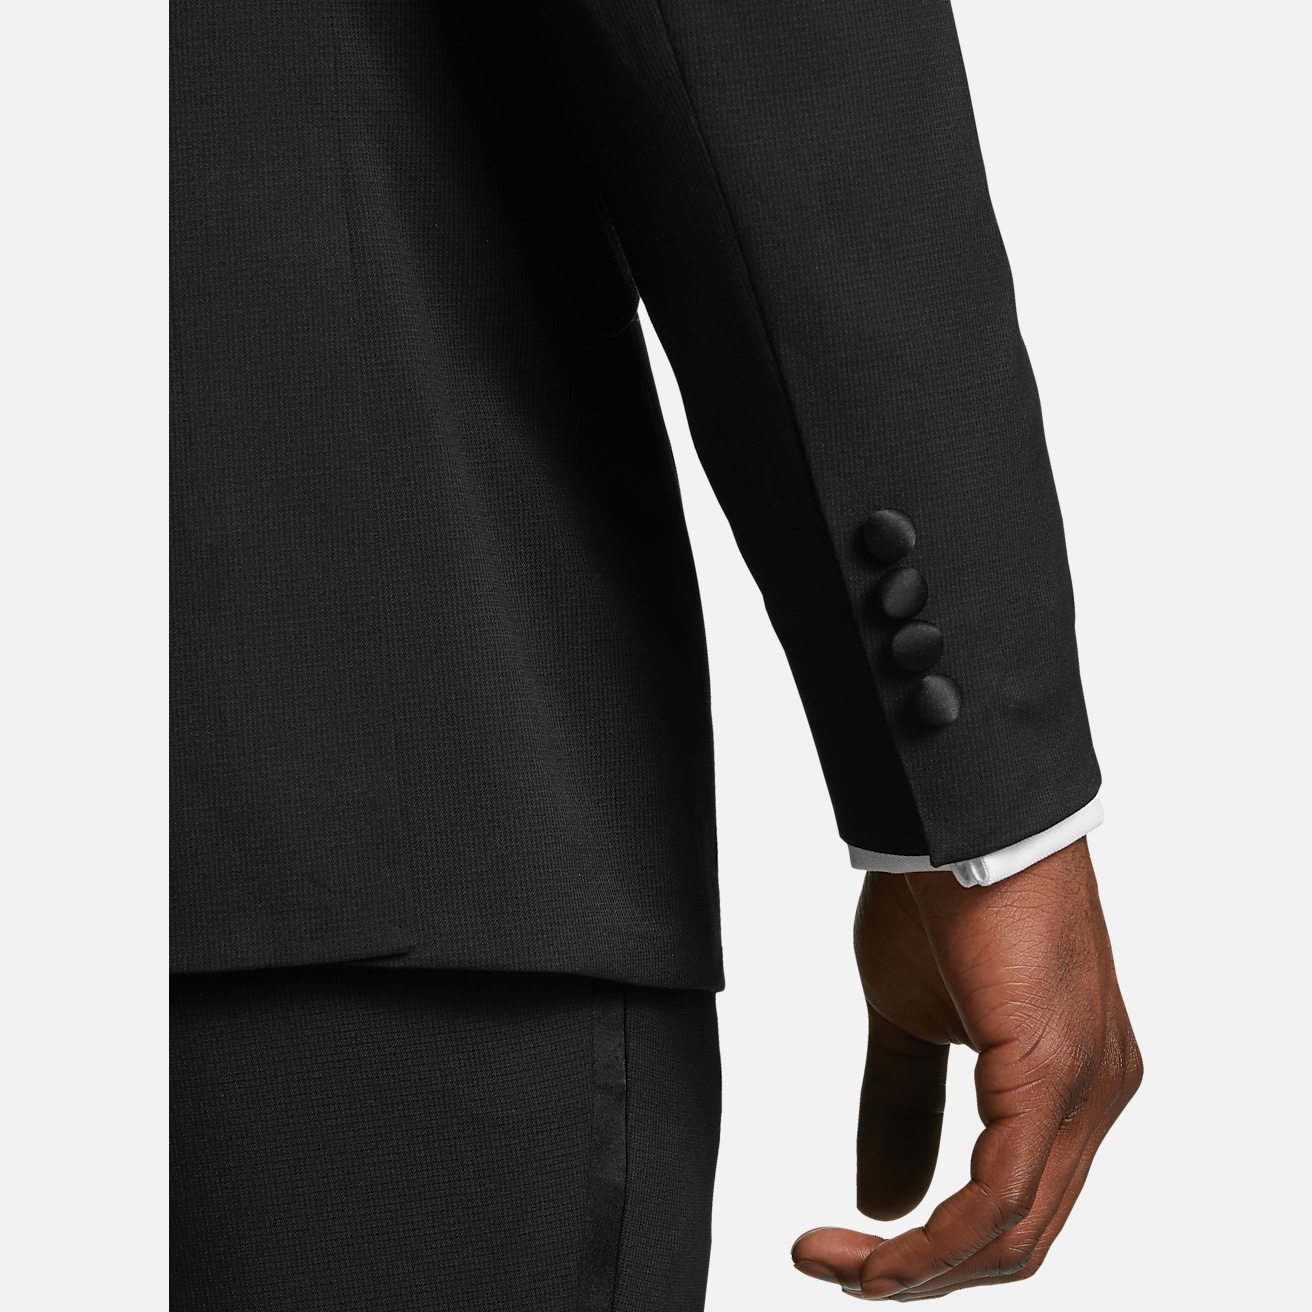 Wilke-Rodriguez Slim Fit Suit Separates Jacket, All Sale